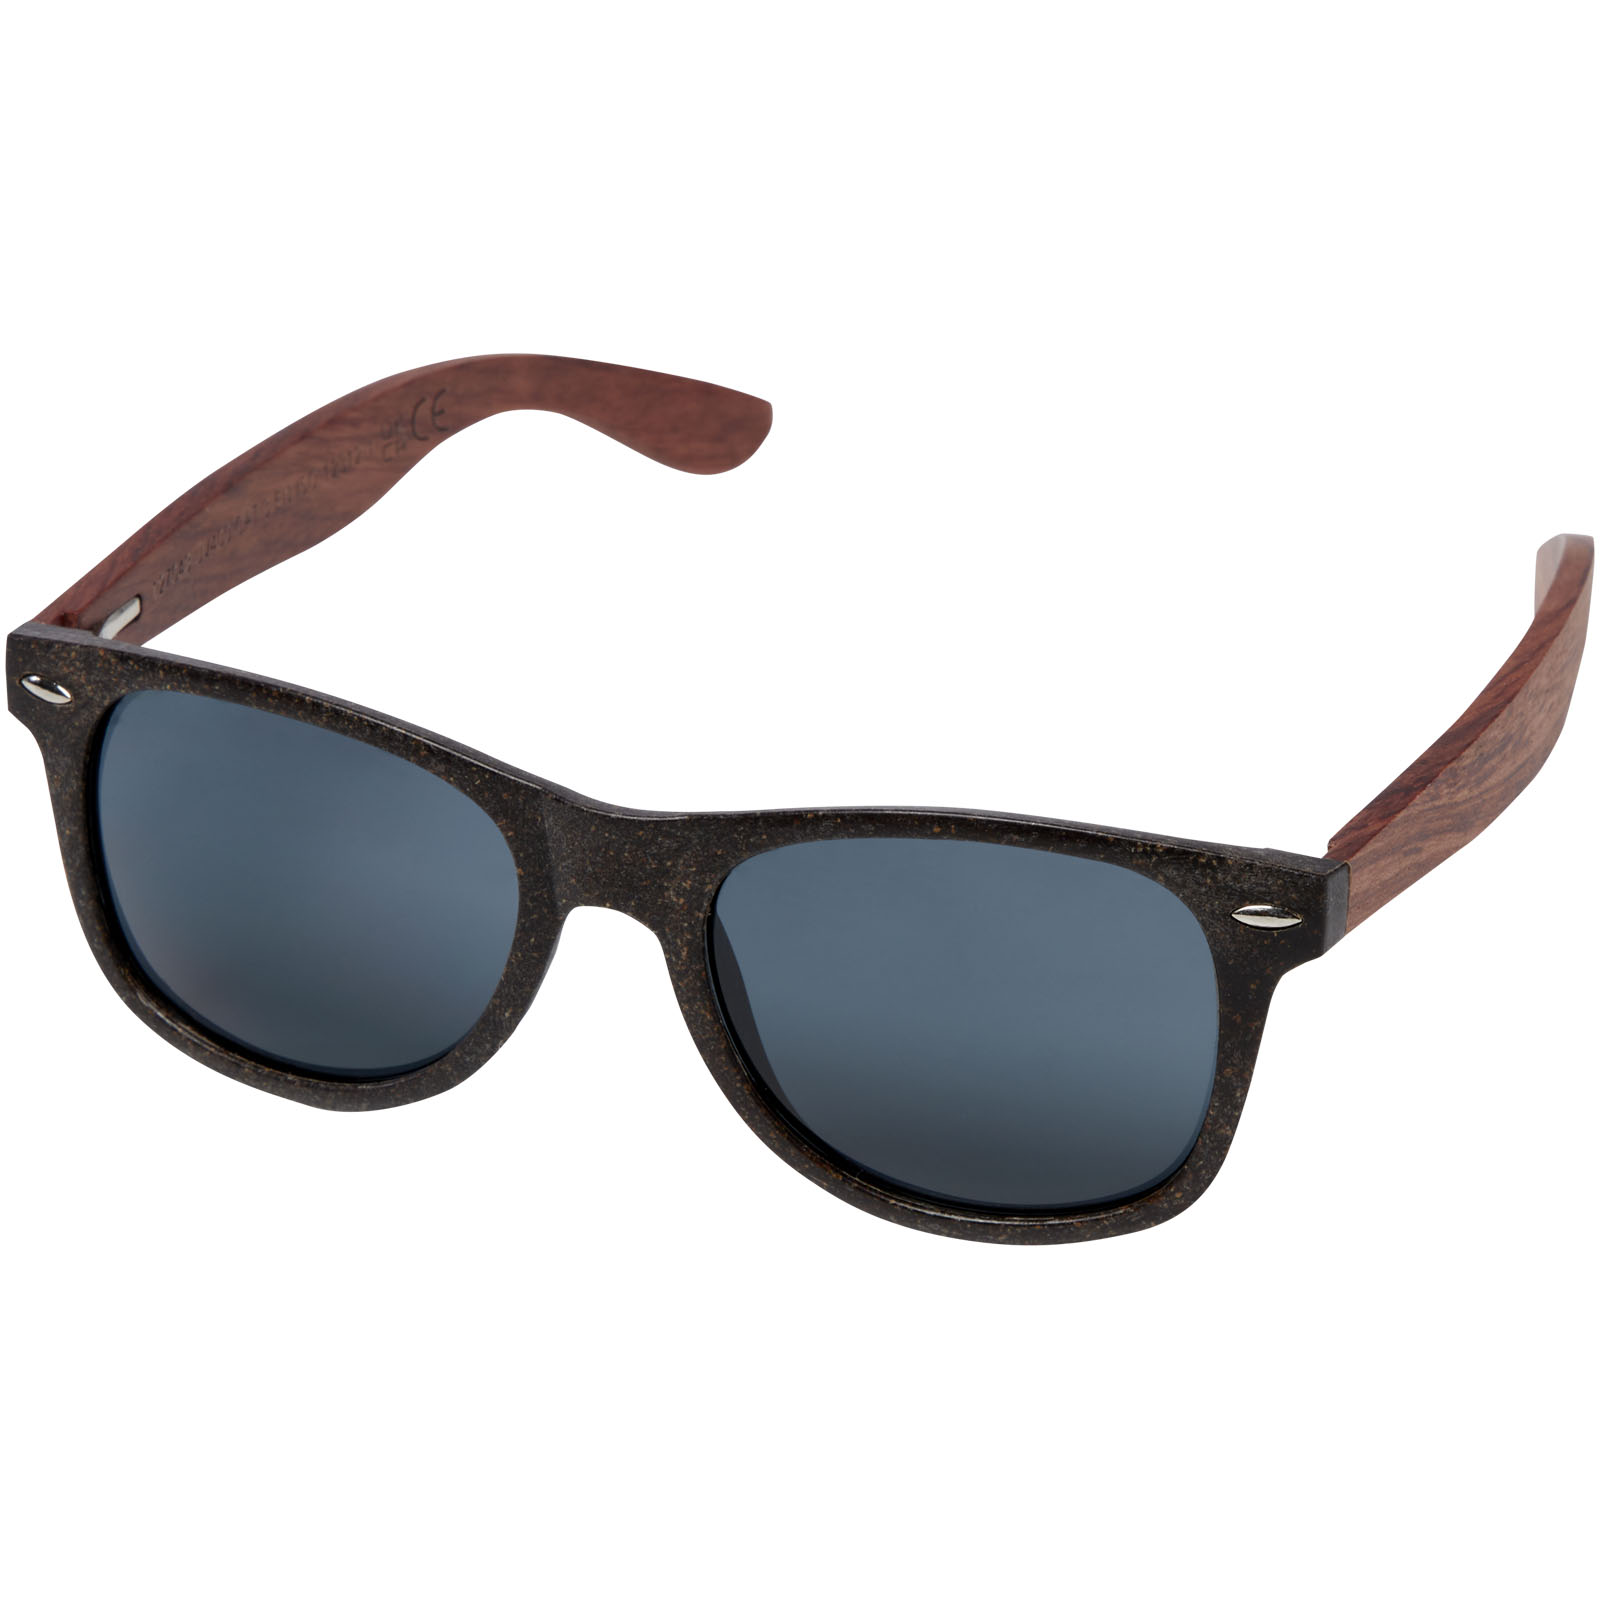 Advertising Sunglasses - Kafo sunglasses - 0